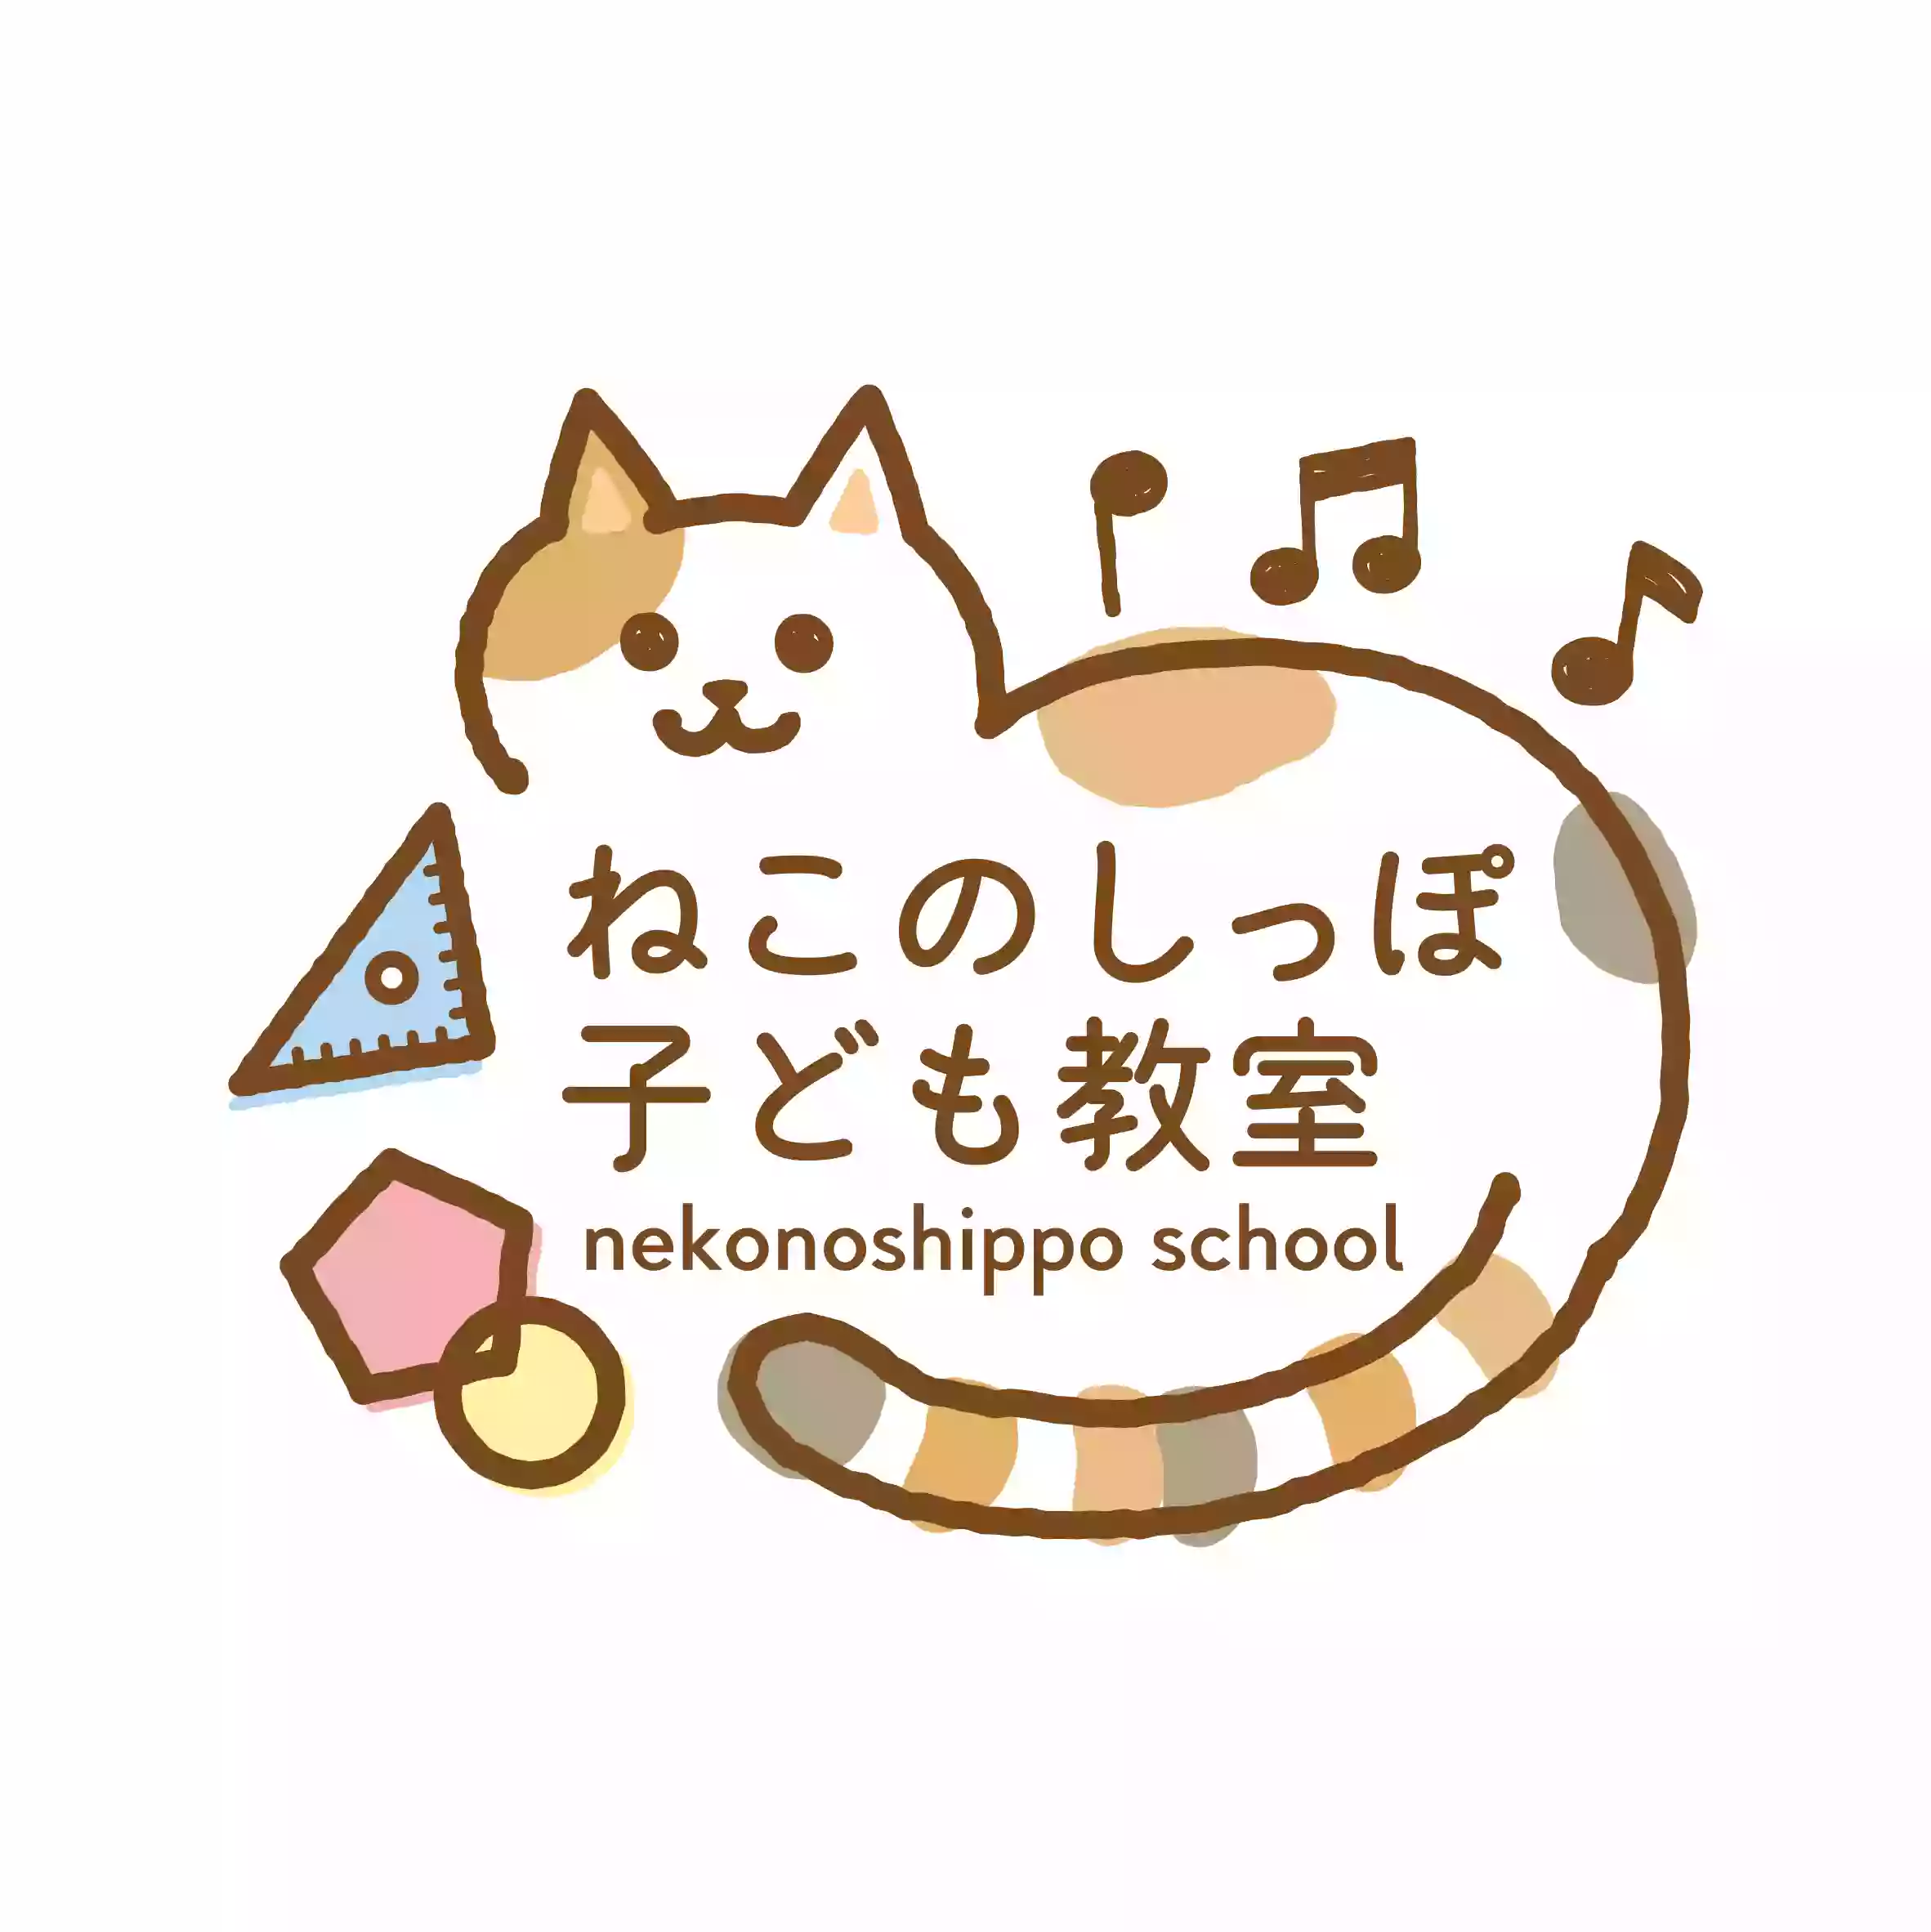 nekono shippo school of music and math